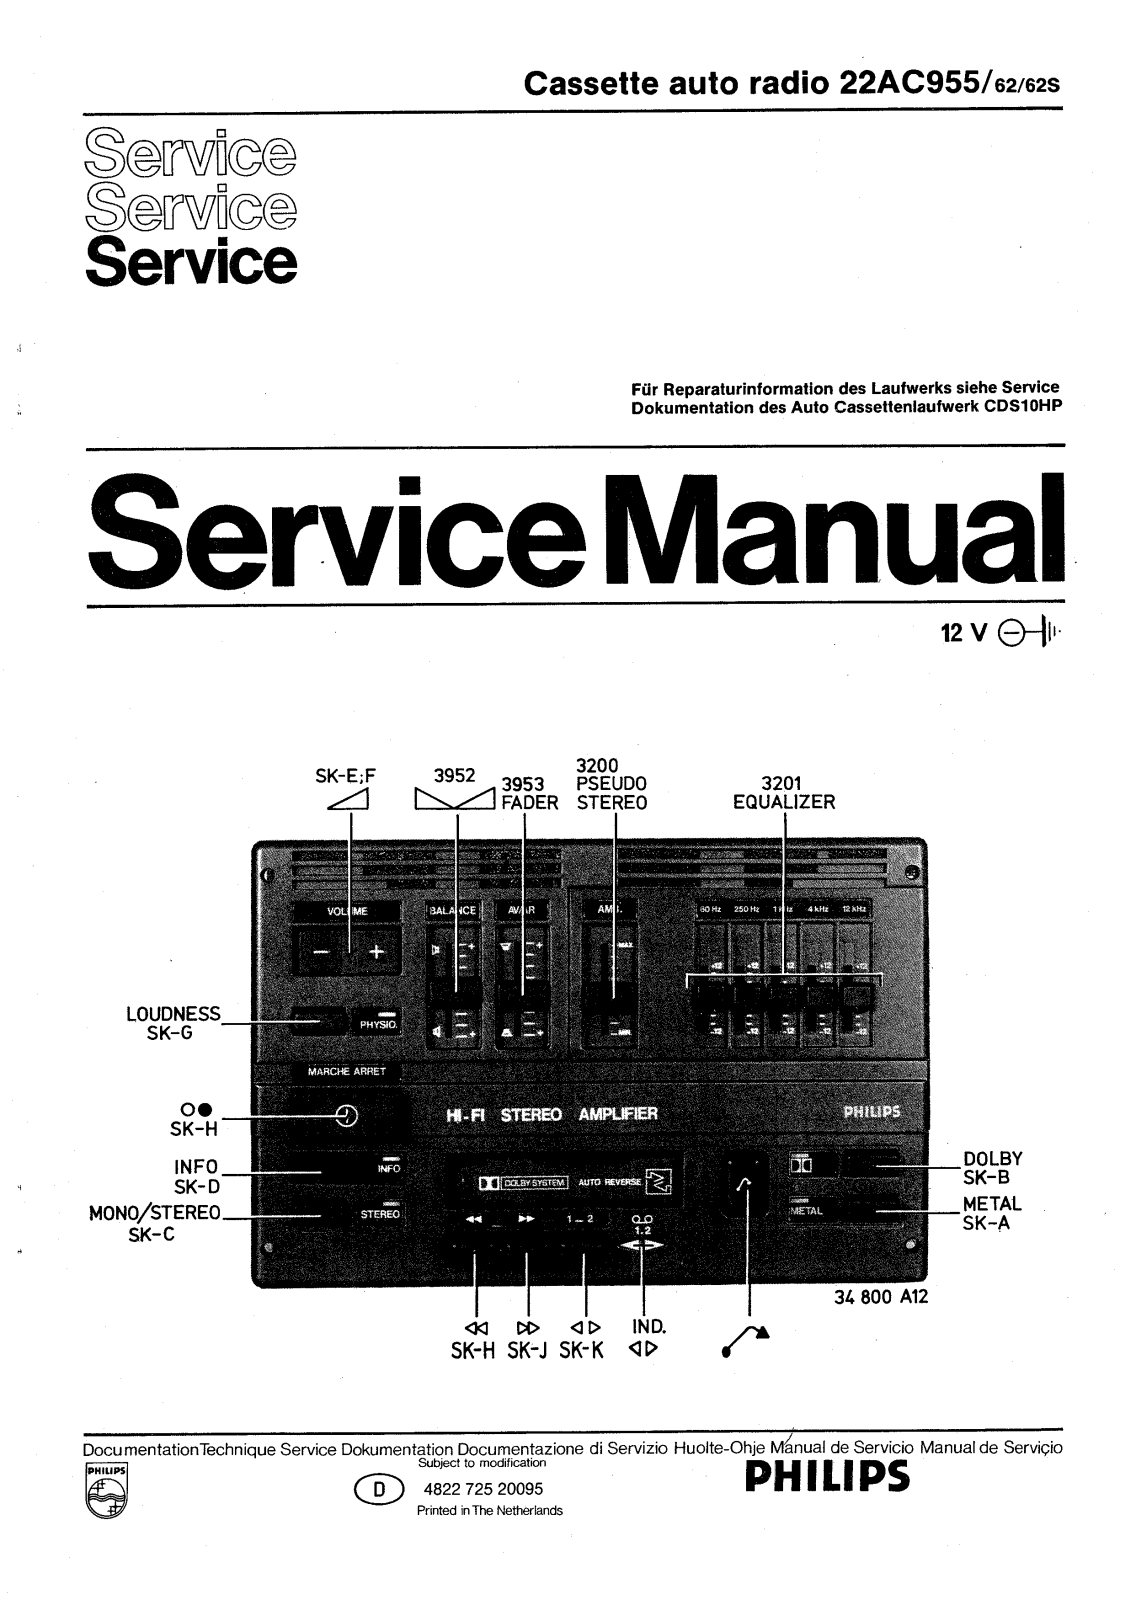 Philips 22AC955 Service manual